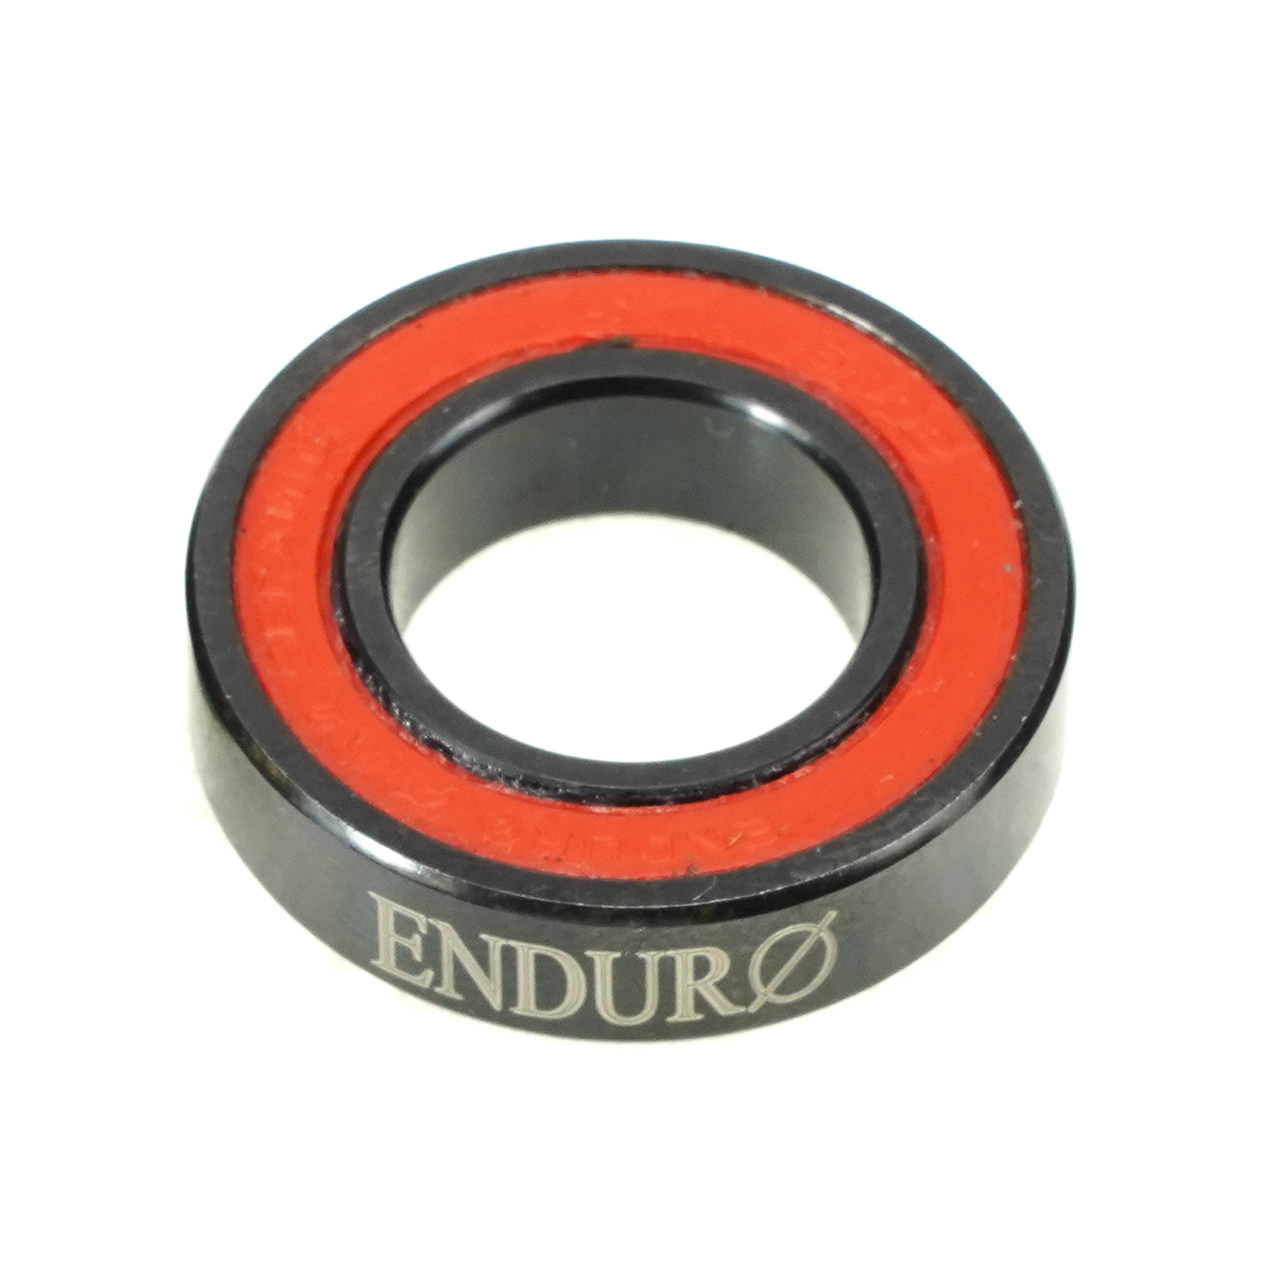 Enduro CO 6801 VV - Enduro Zero, Black-Oxide, Ceramic Hybrid, ABEC-5, Radial Bearing (C3 Clearance) - 12mm x 21mm x 5mm